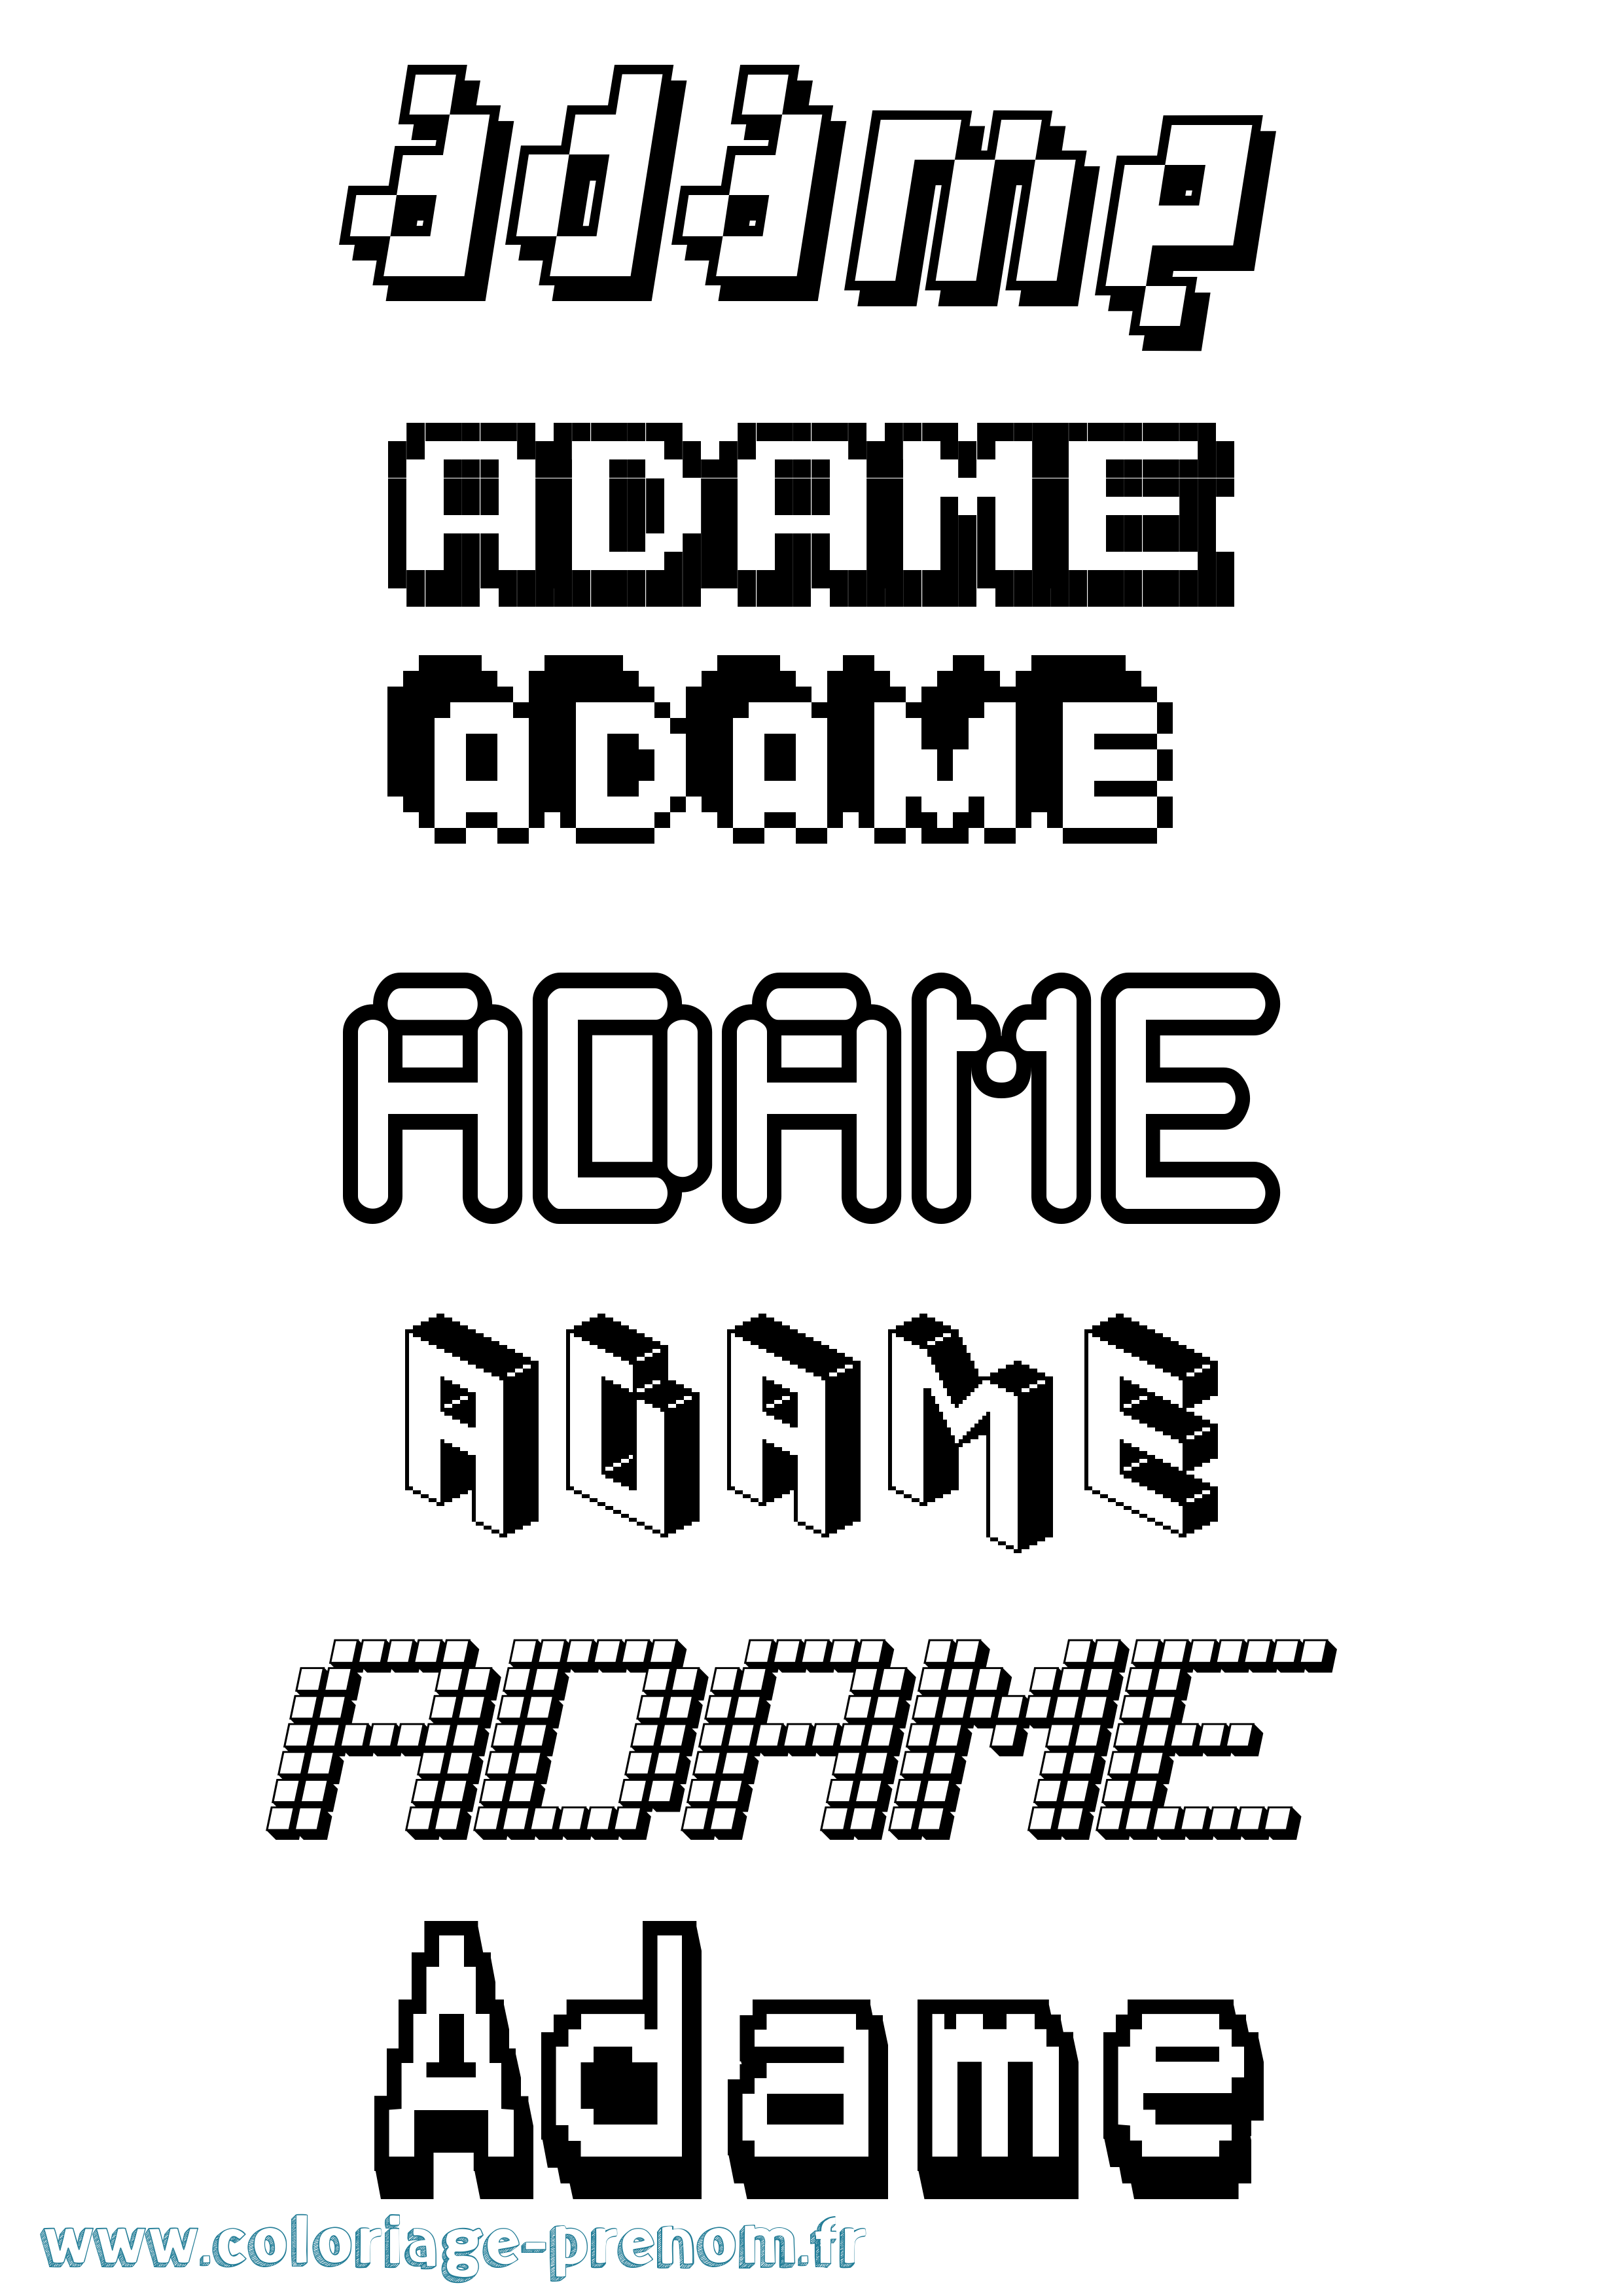 Coloriage prénom Adame